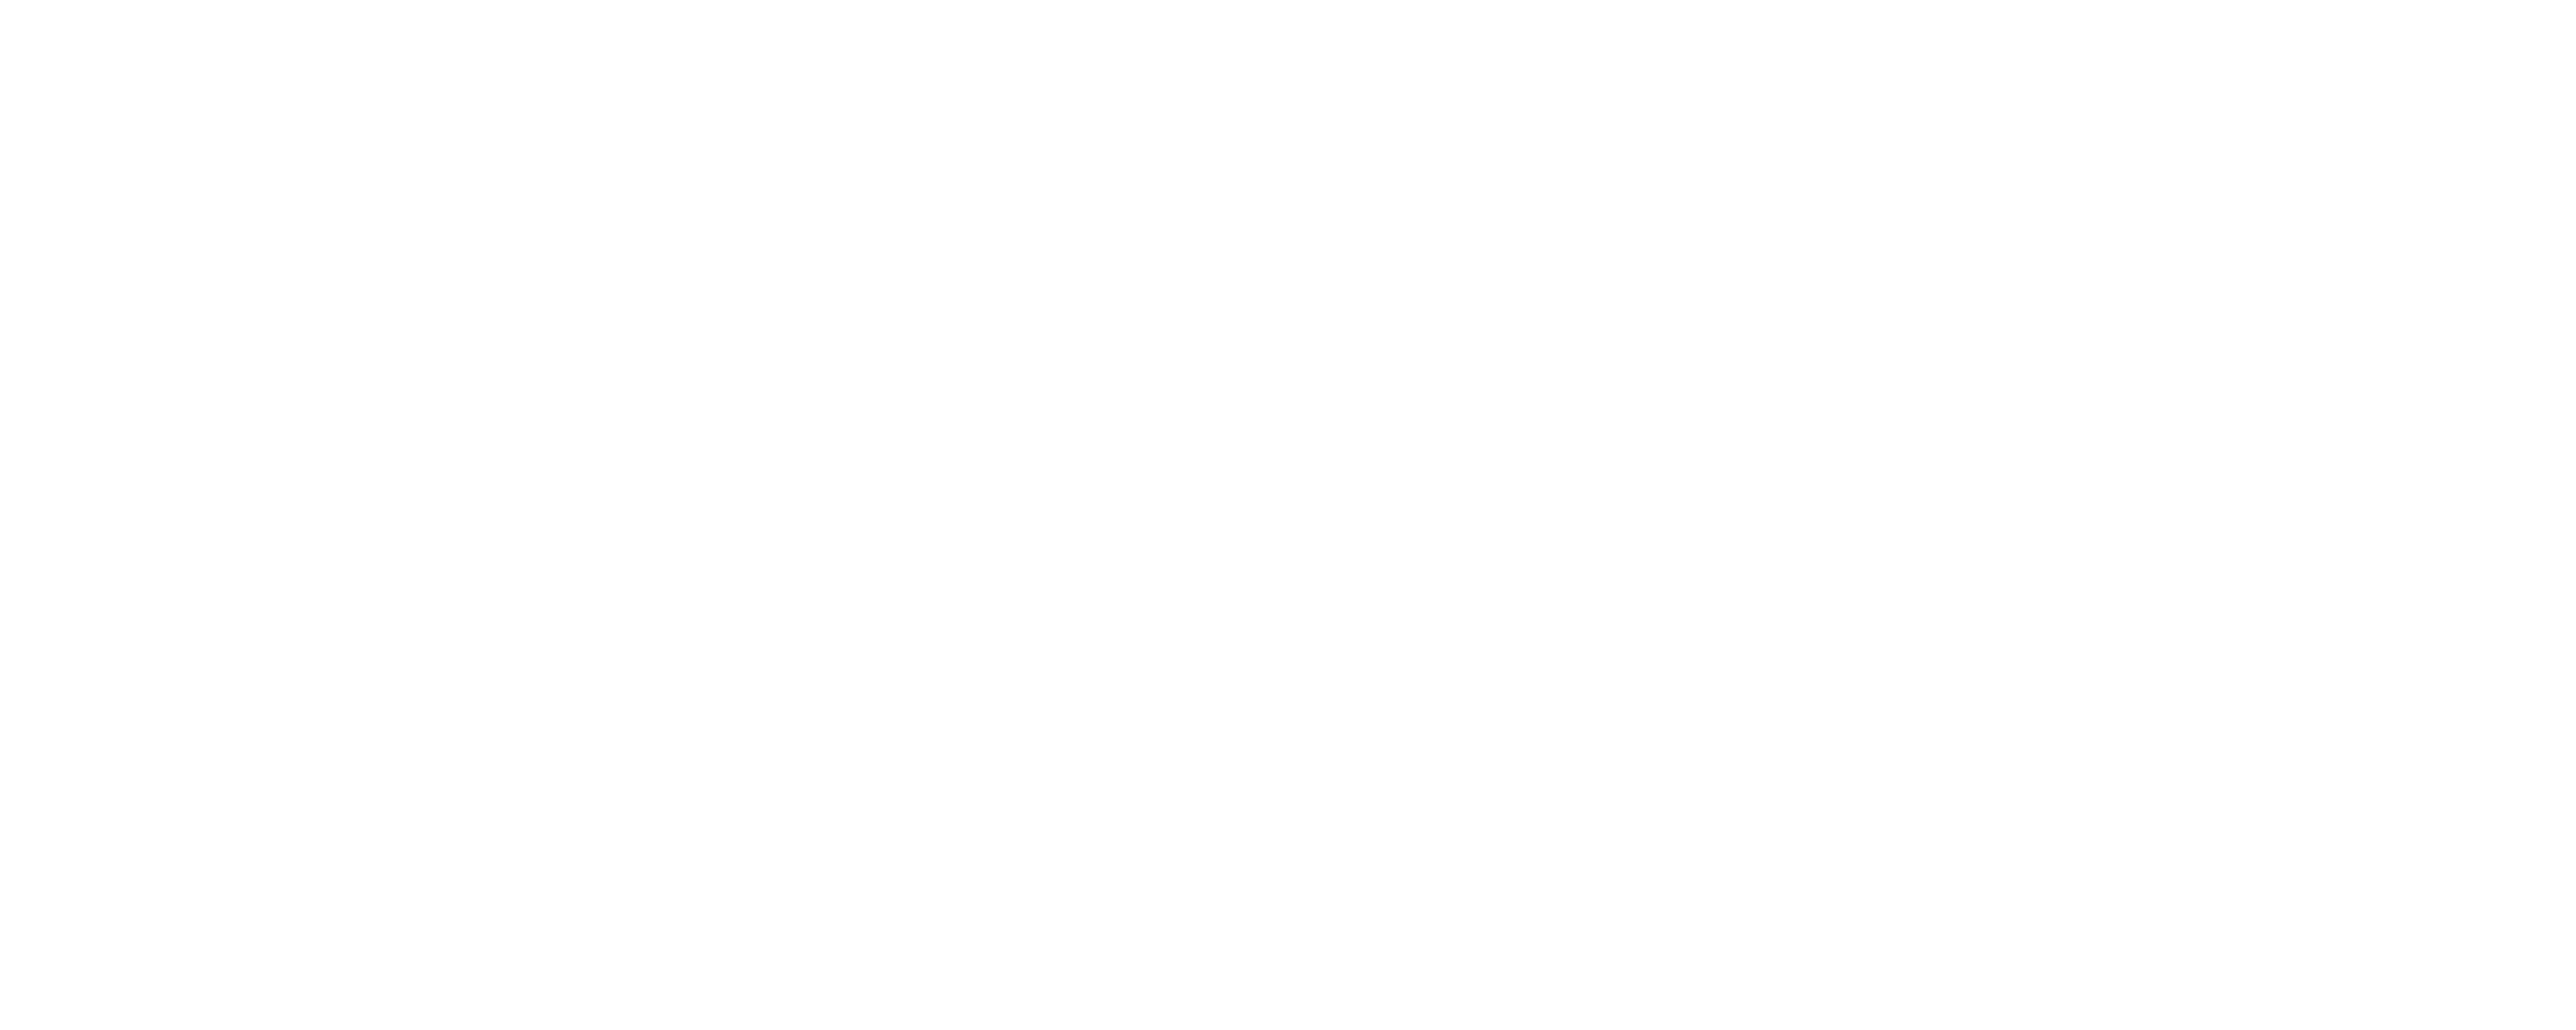 USERS IBM